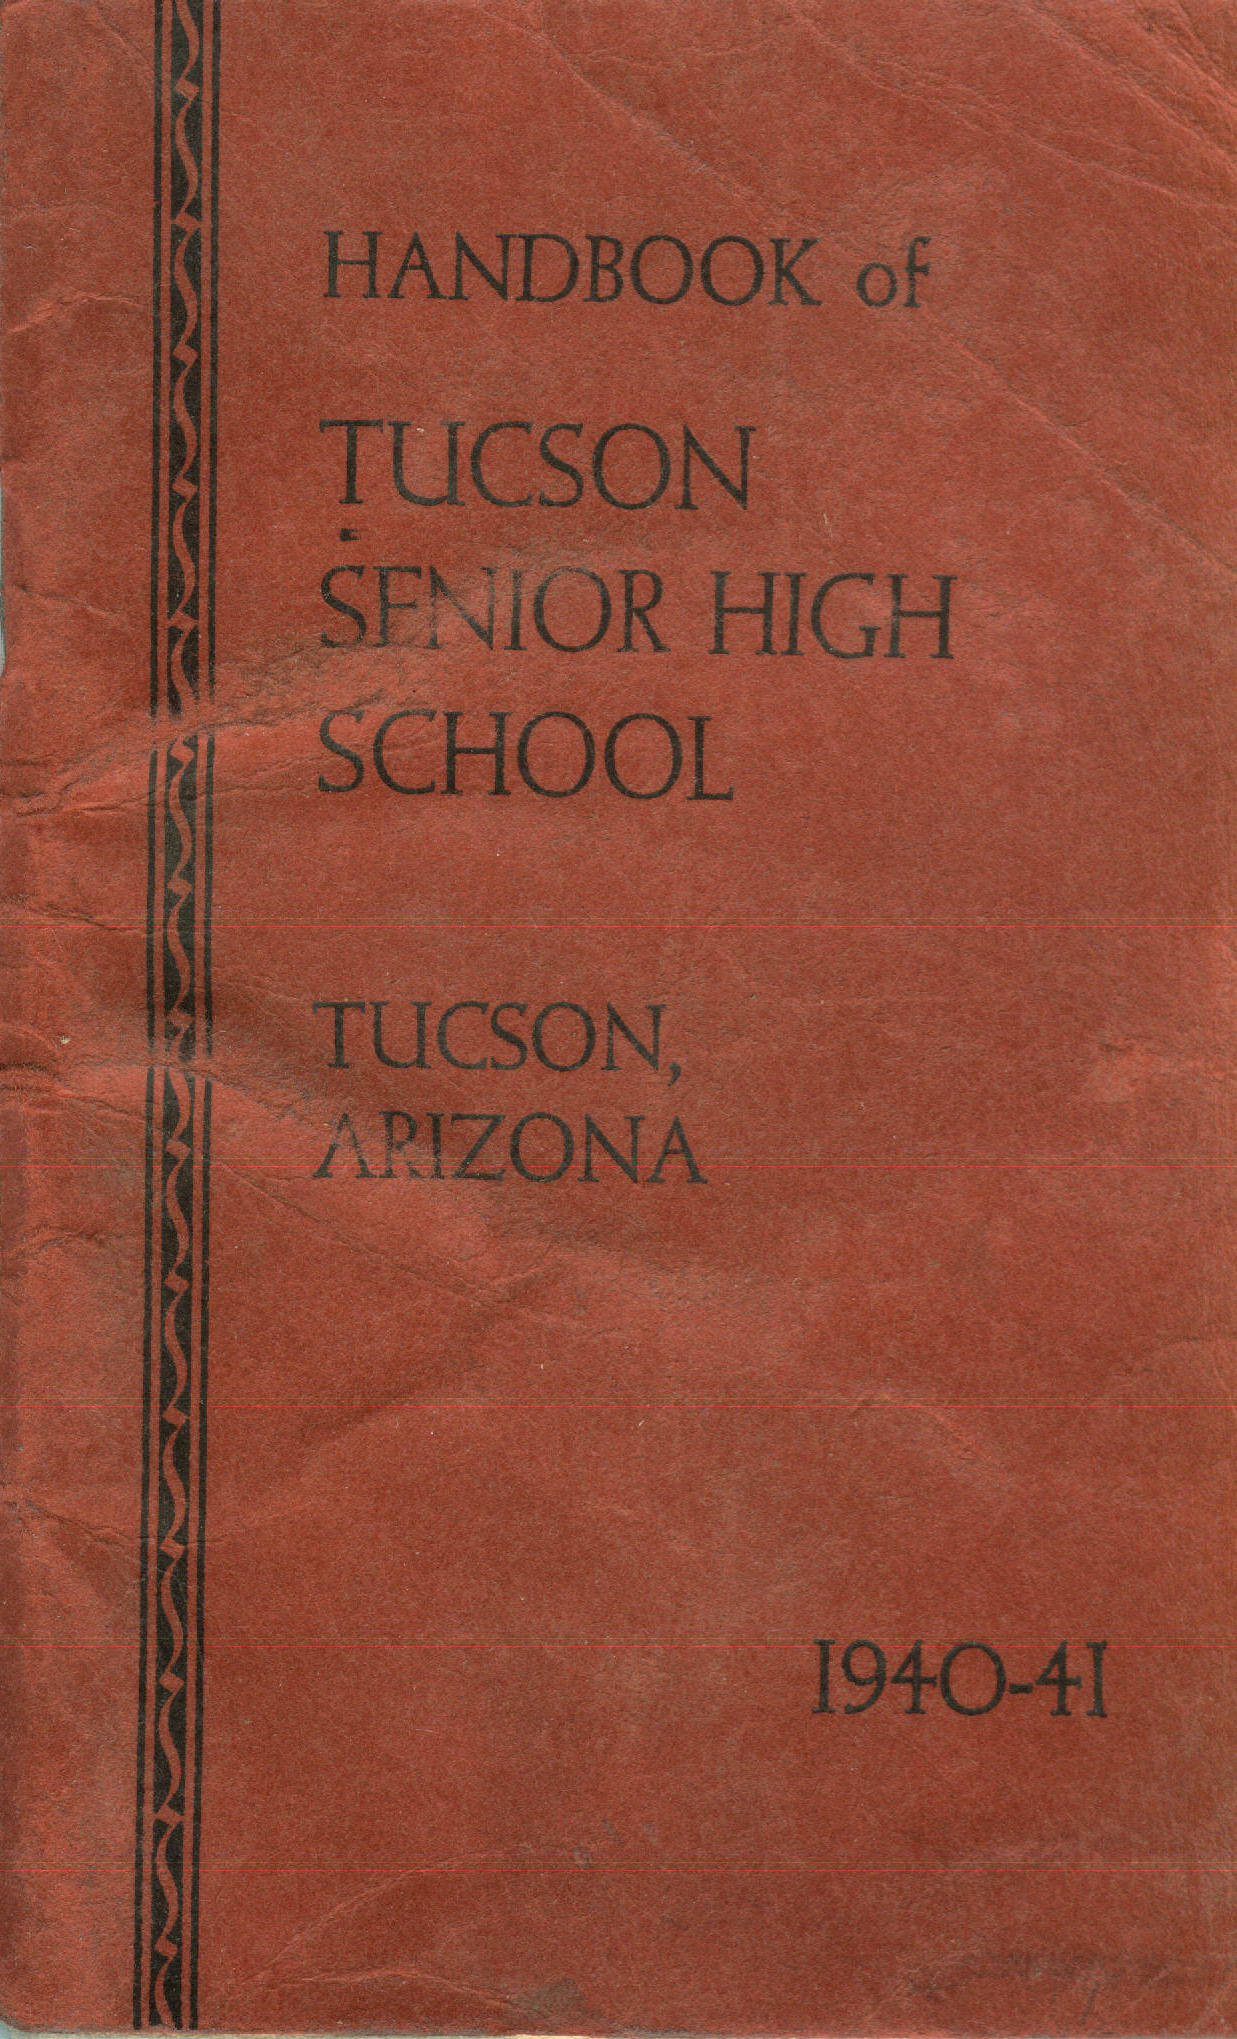 Tucson High Handbook 1940